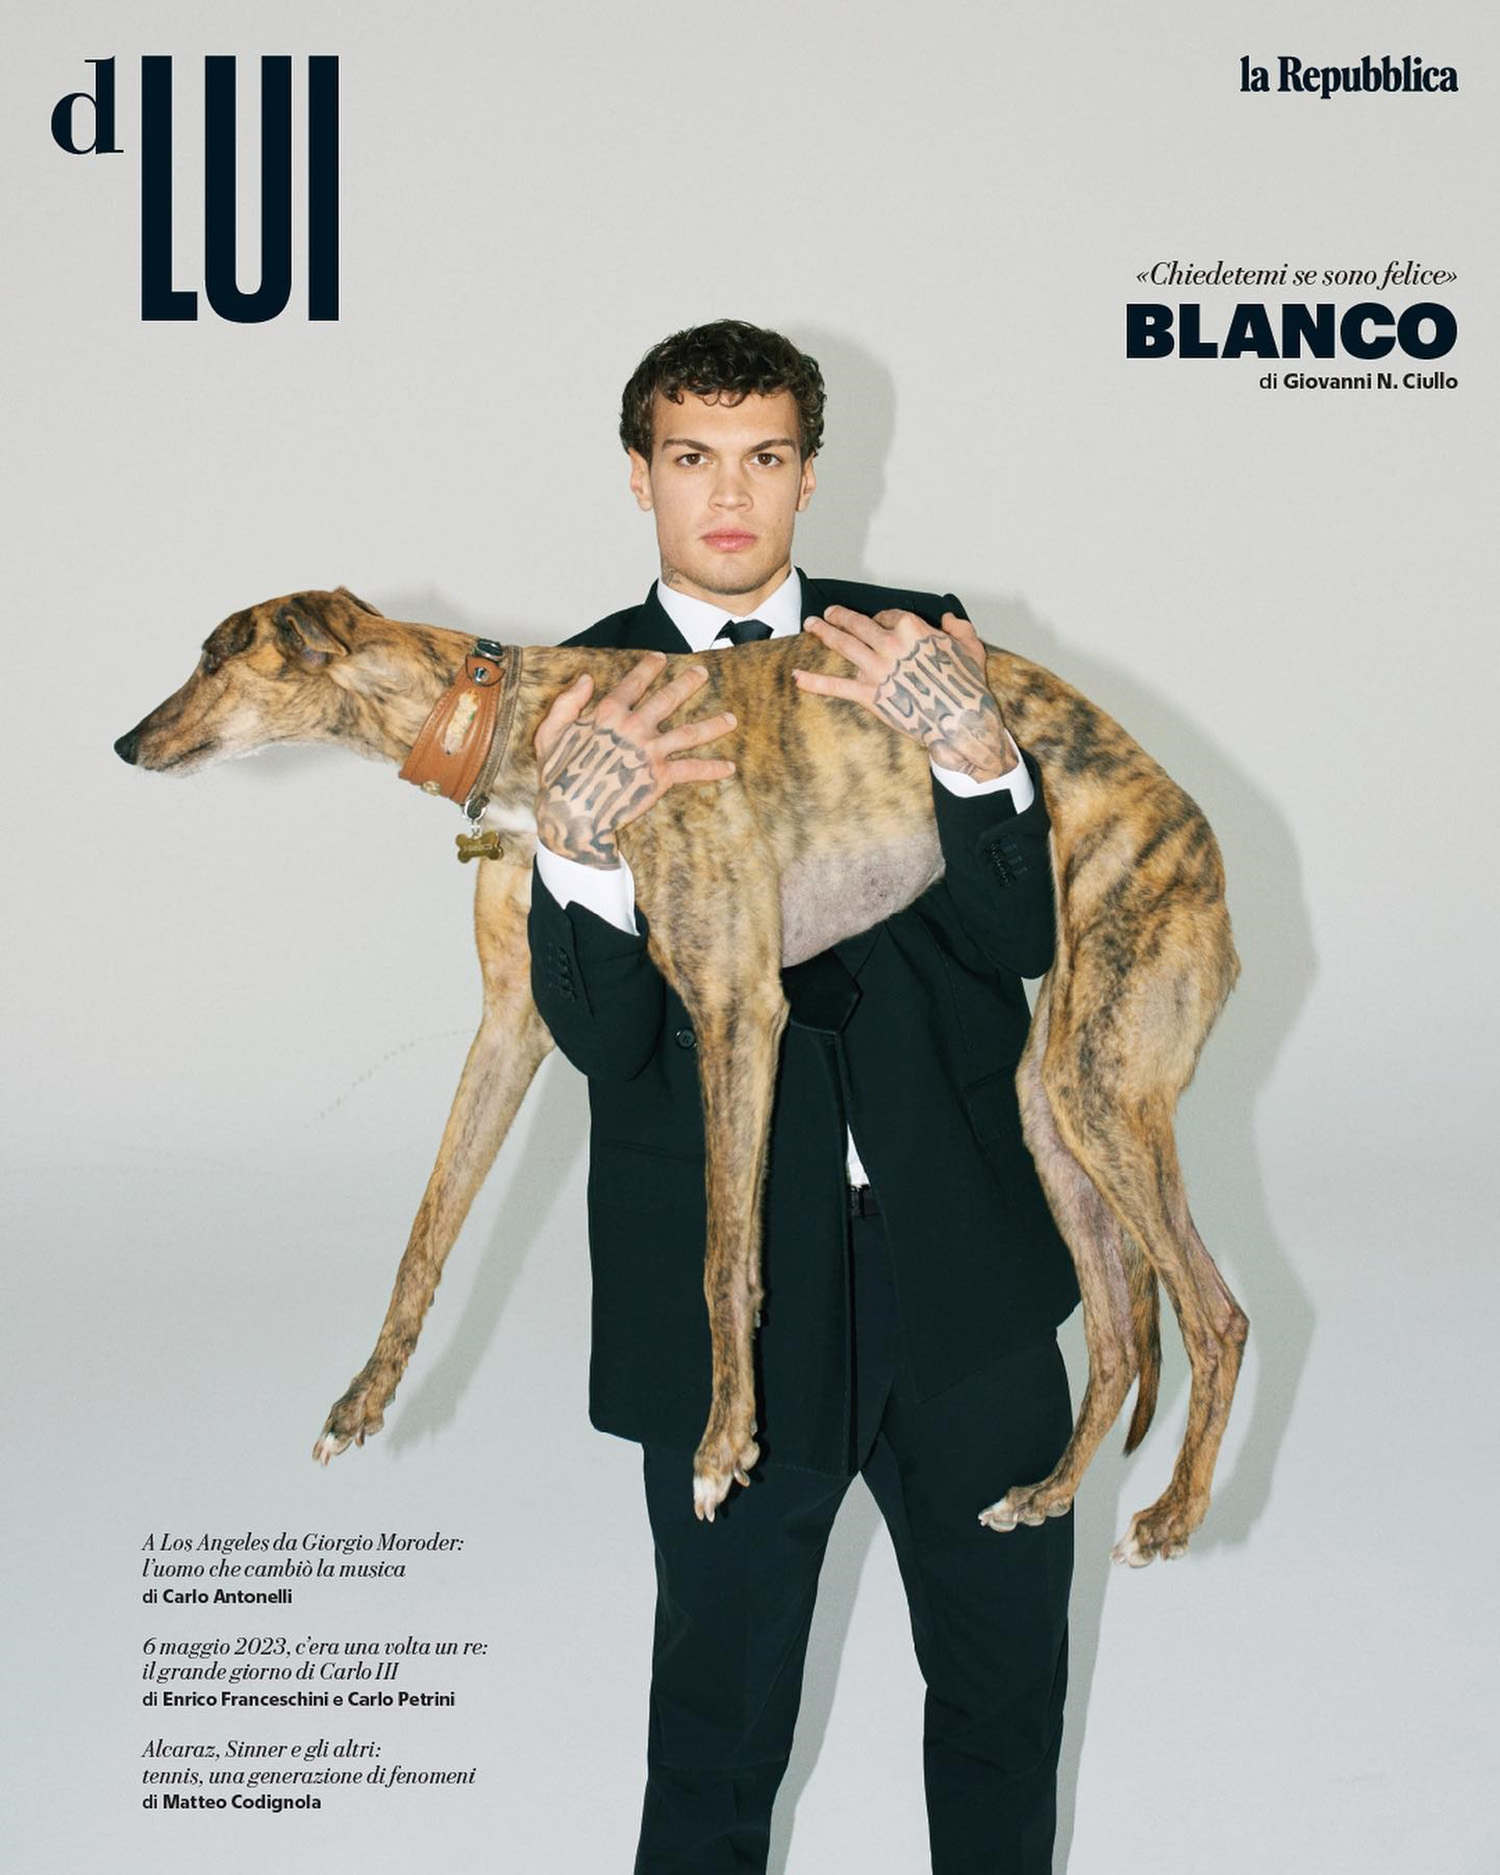 BLANCO in Dolce & Gabbana on D Lui la Repubblica April 22nd, 2023 by Jonas Unger